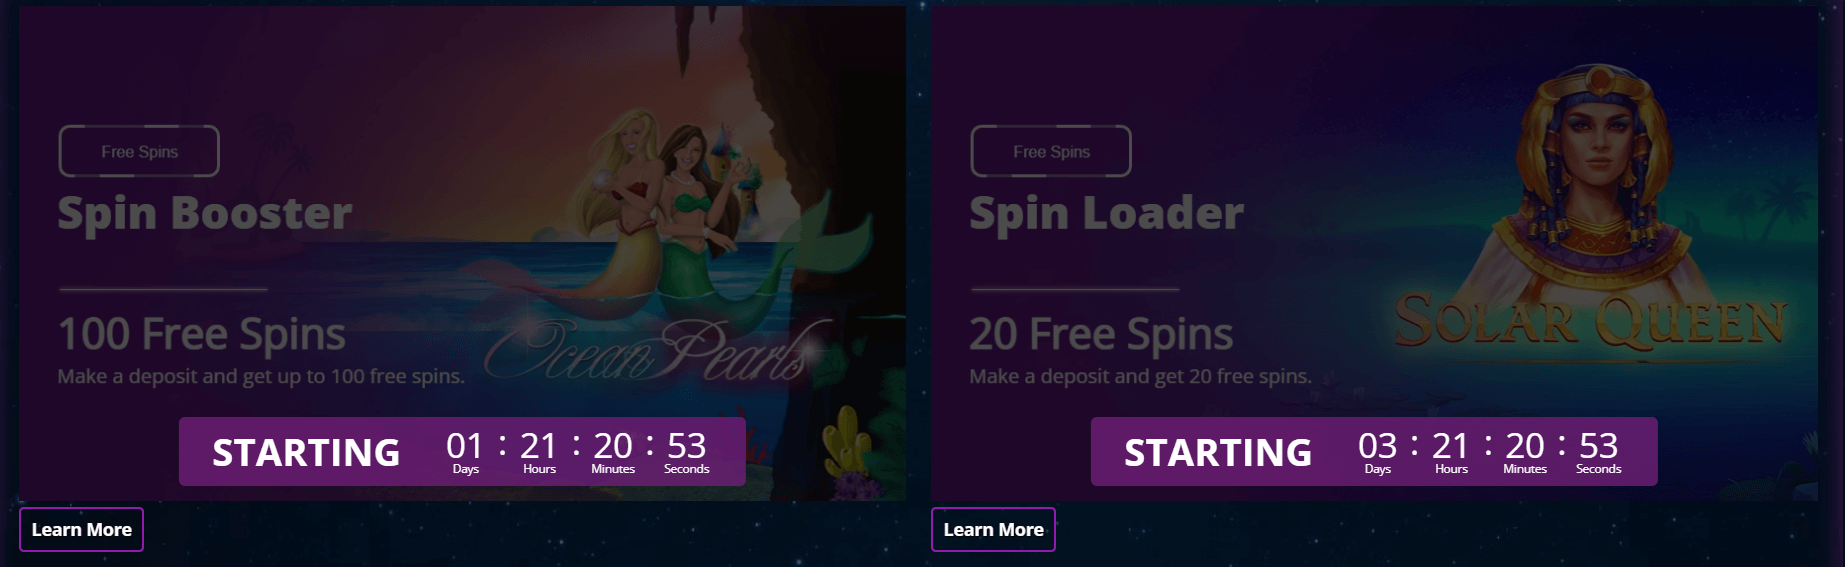 4Stars Games Casino Promotions